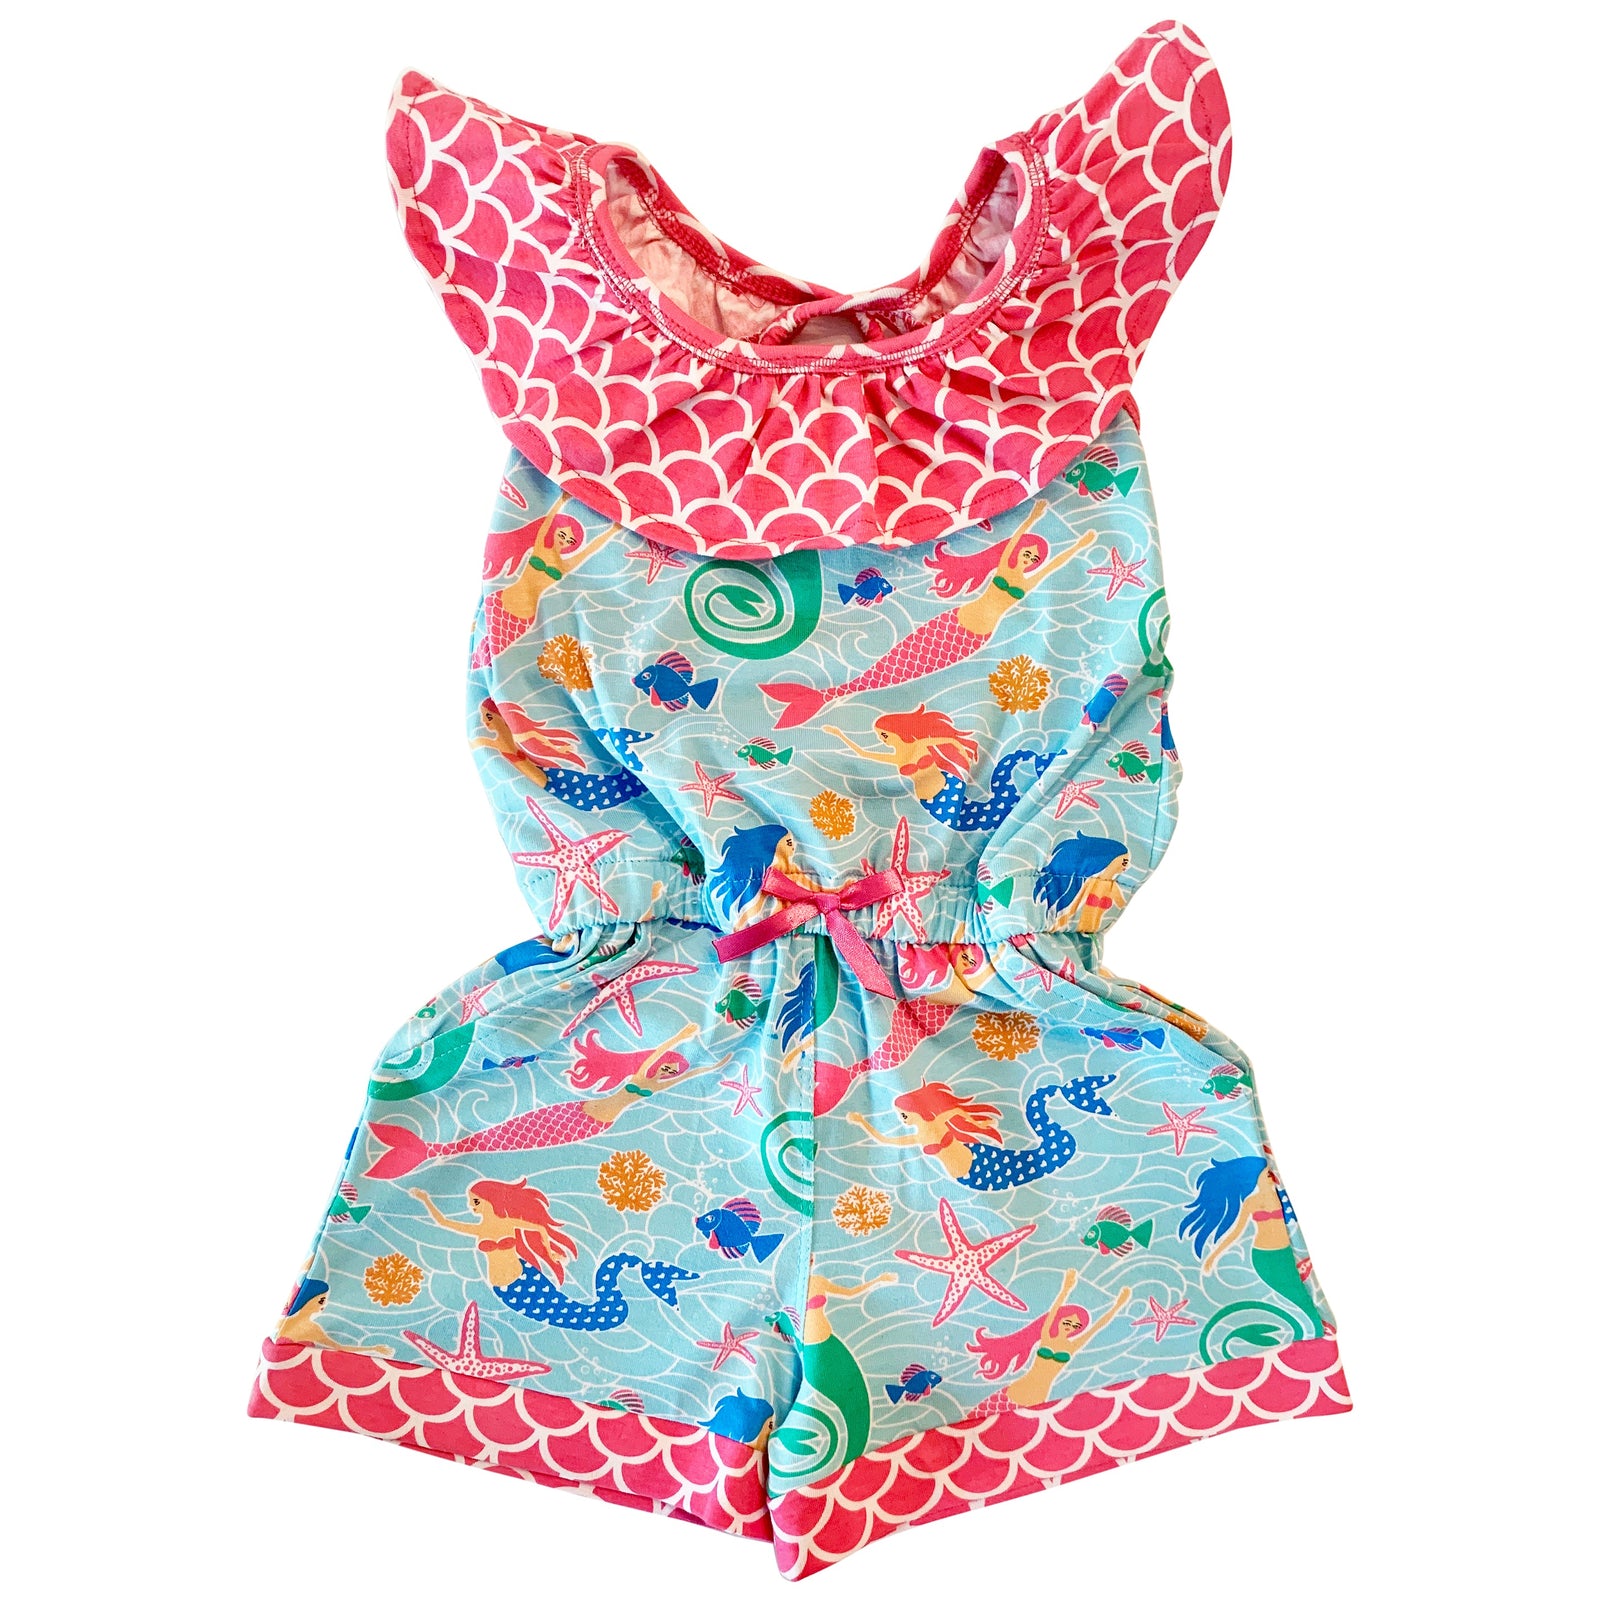 AnnLoren Little Big Girls Nautical Jumpsuit Mermaid Romper Spring Summer Boutique Clothing Sizes 2/3T - 11/12